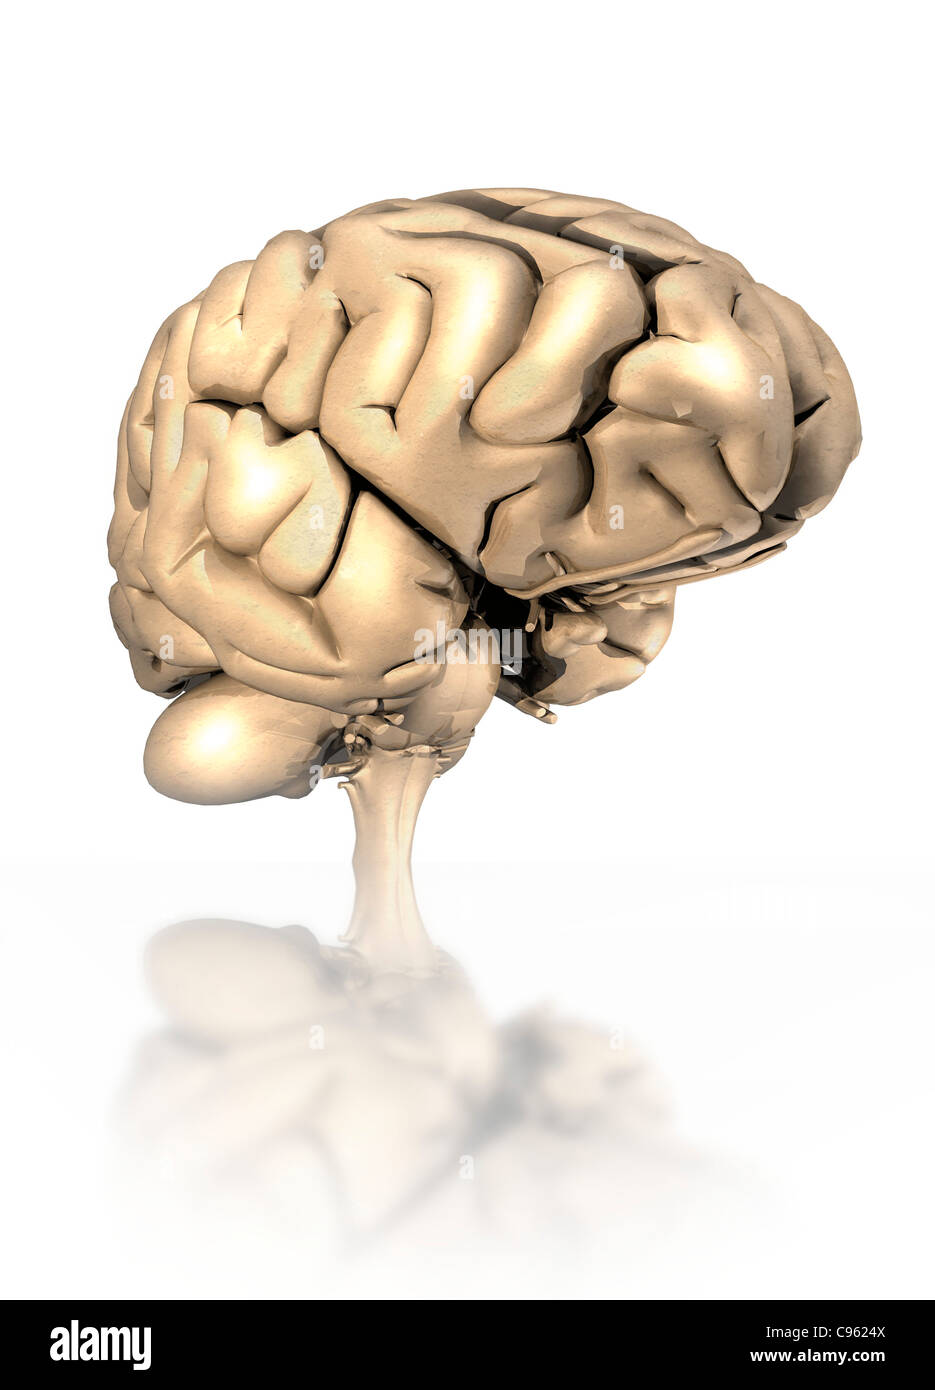 Human brain, computer artwork. Stock Photo